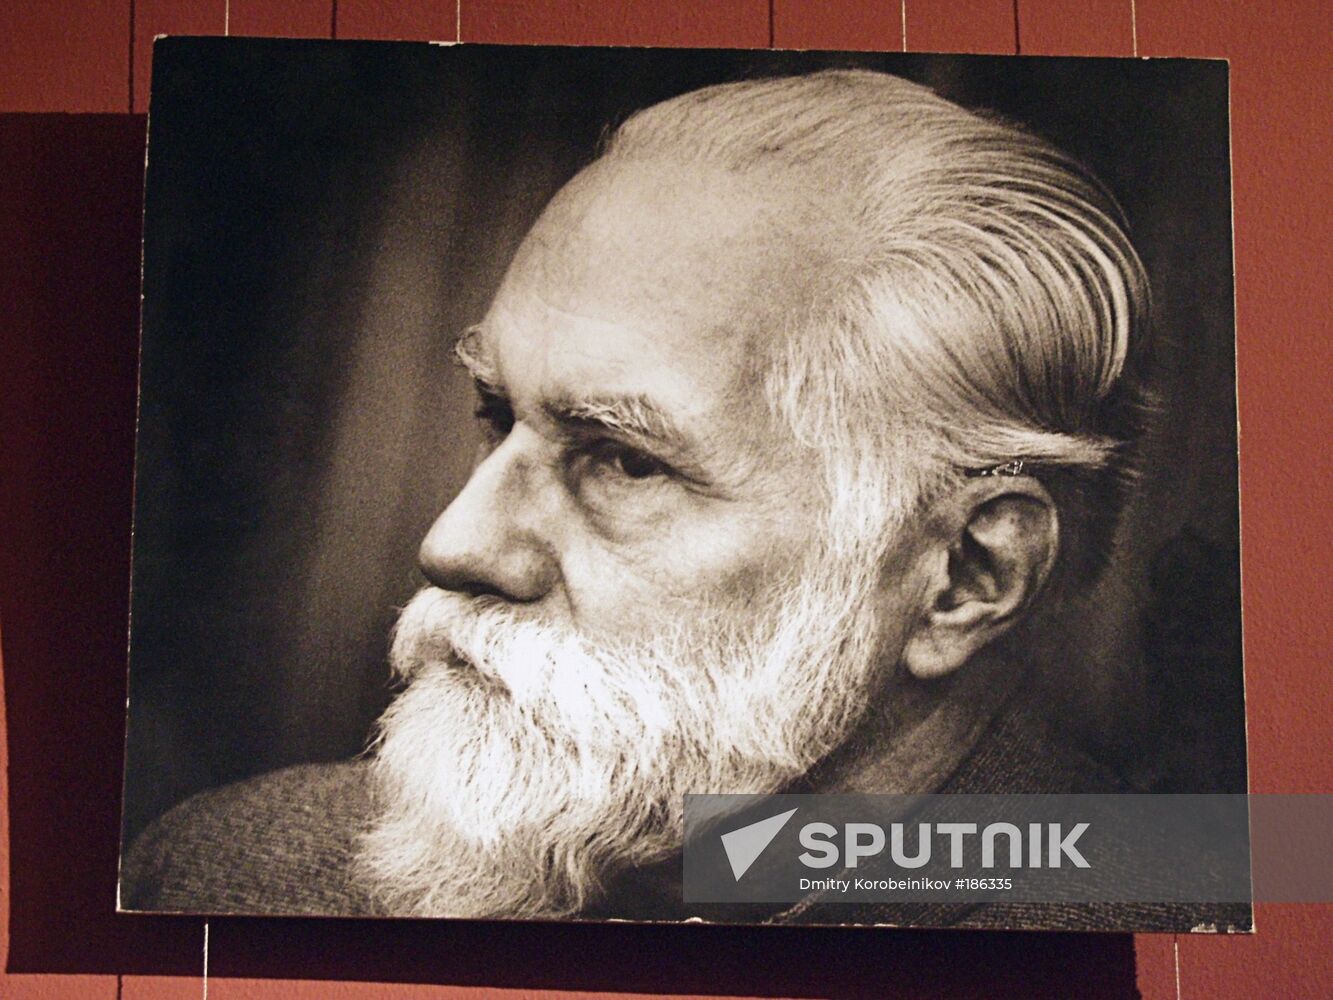 Svyatoslav Roerich portrait